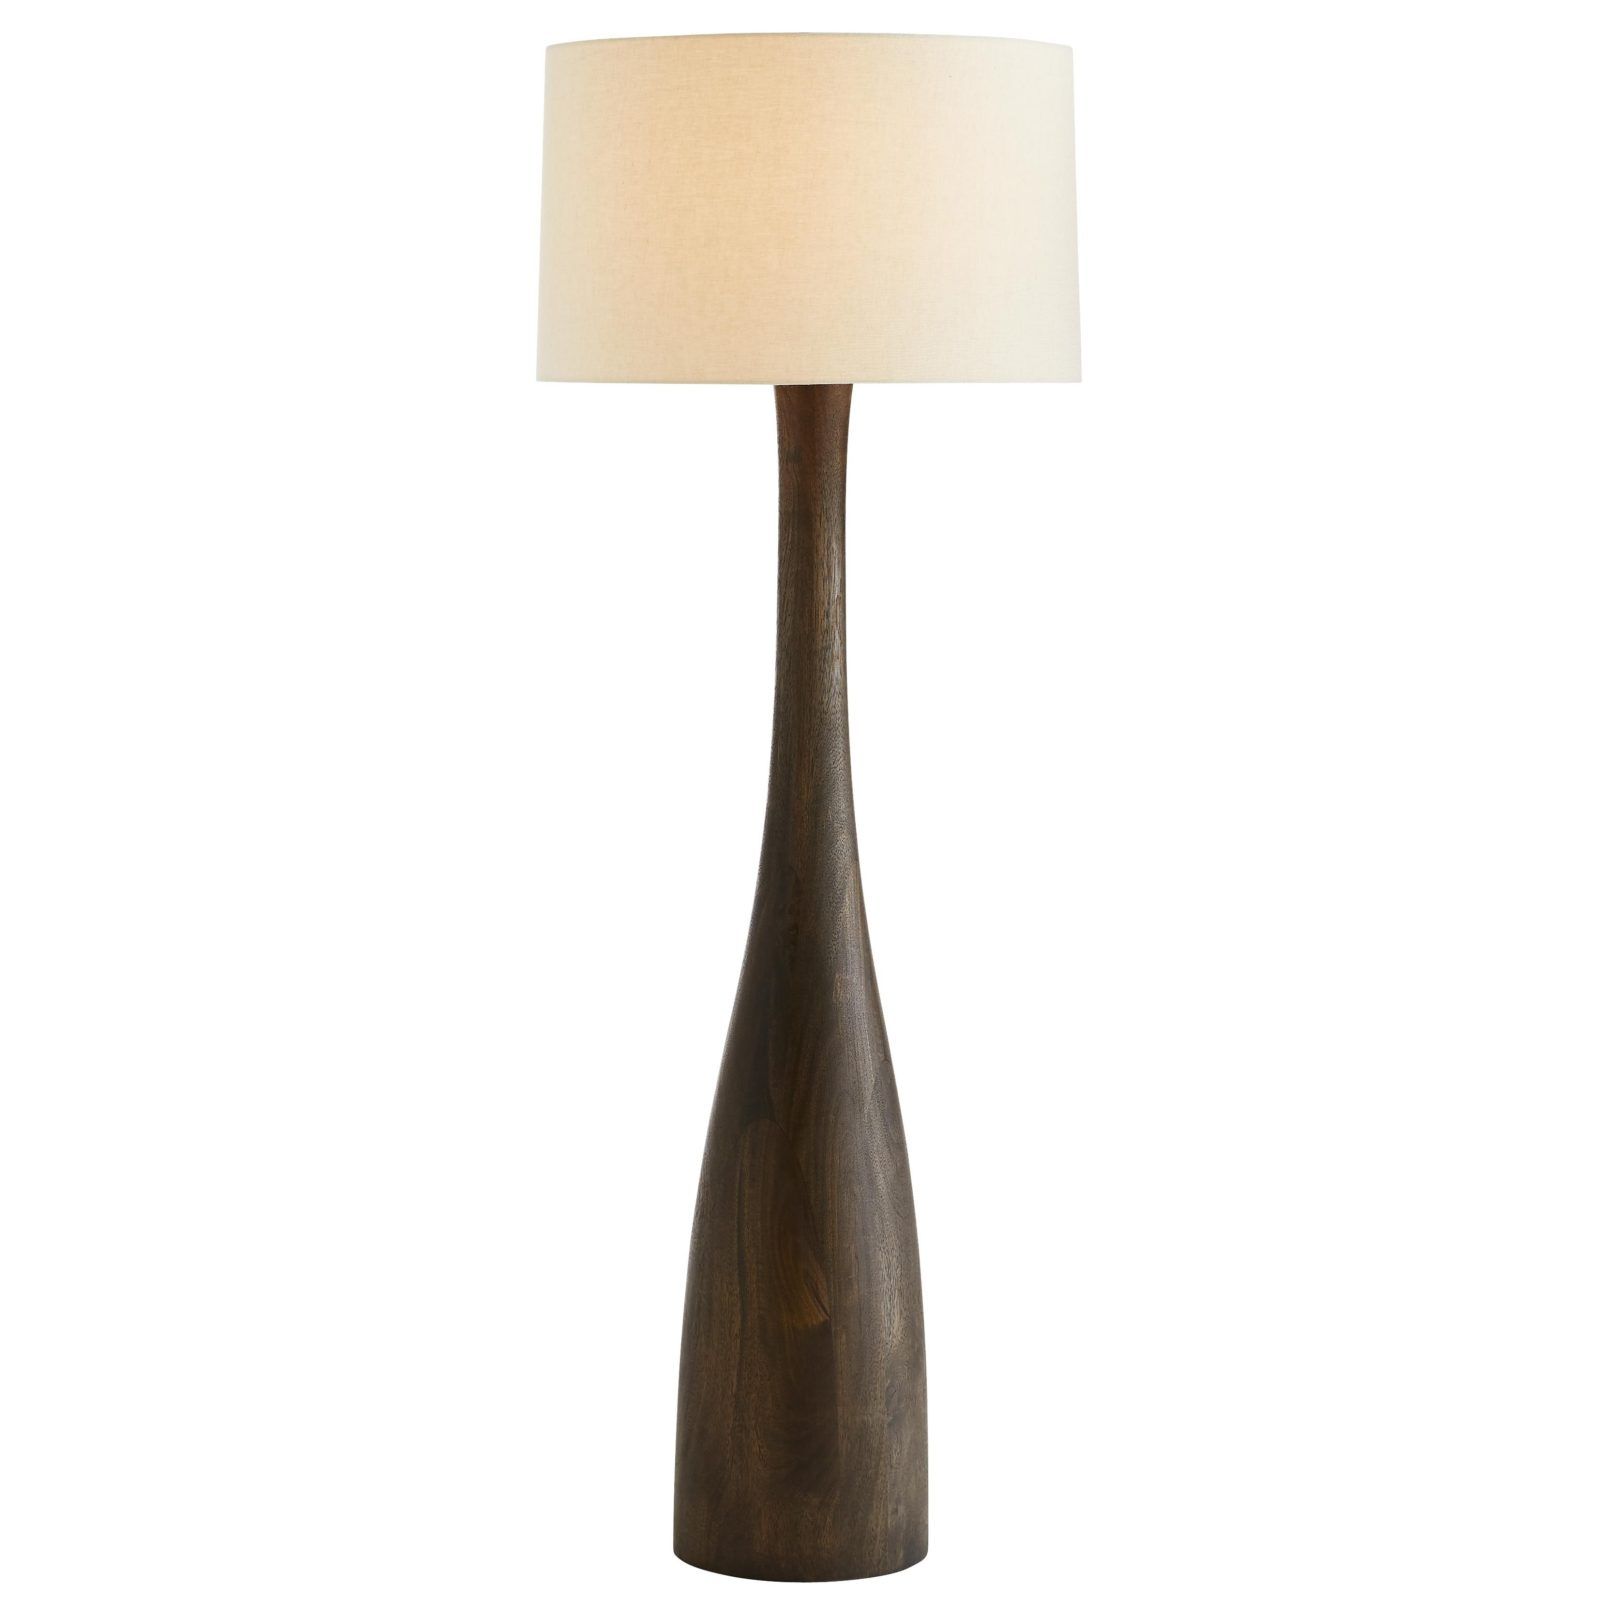 Mango Wood Floor Lamp – Solid Mango Wood Accent Floor Lamp For Mango Wood Floor Lamps (View 3 of 15)